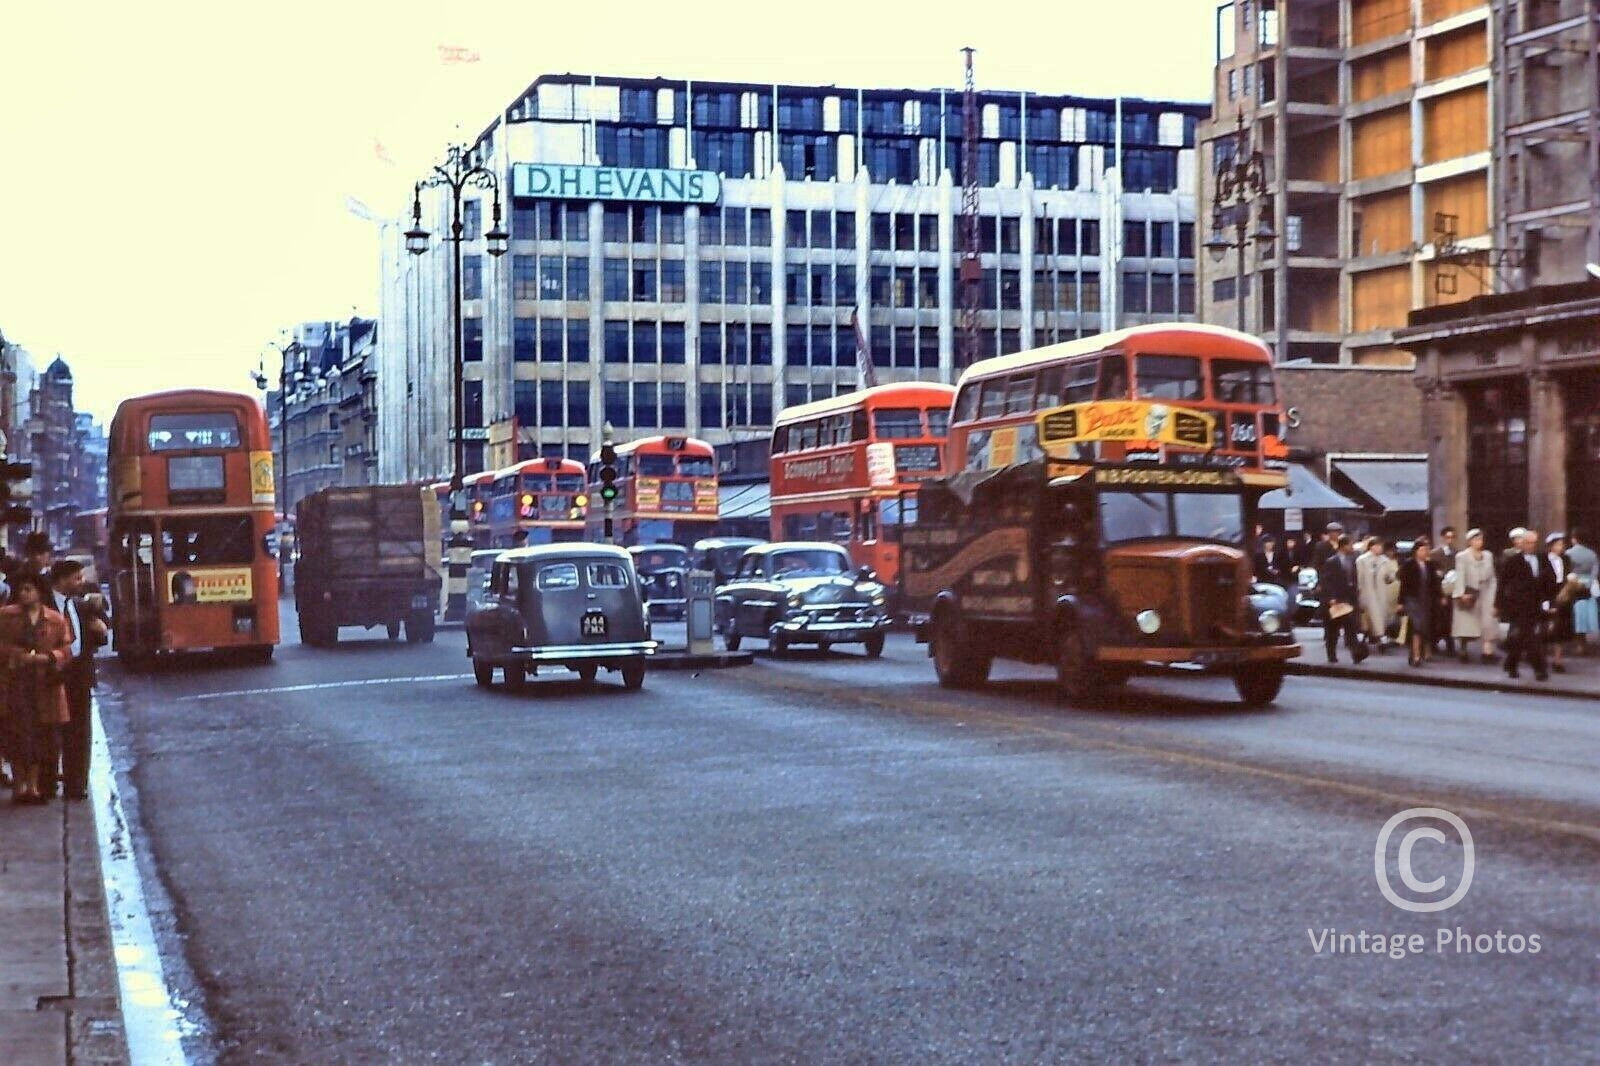 1950s Oxford Street, London - DH Evans & Buses